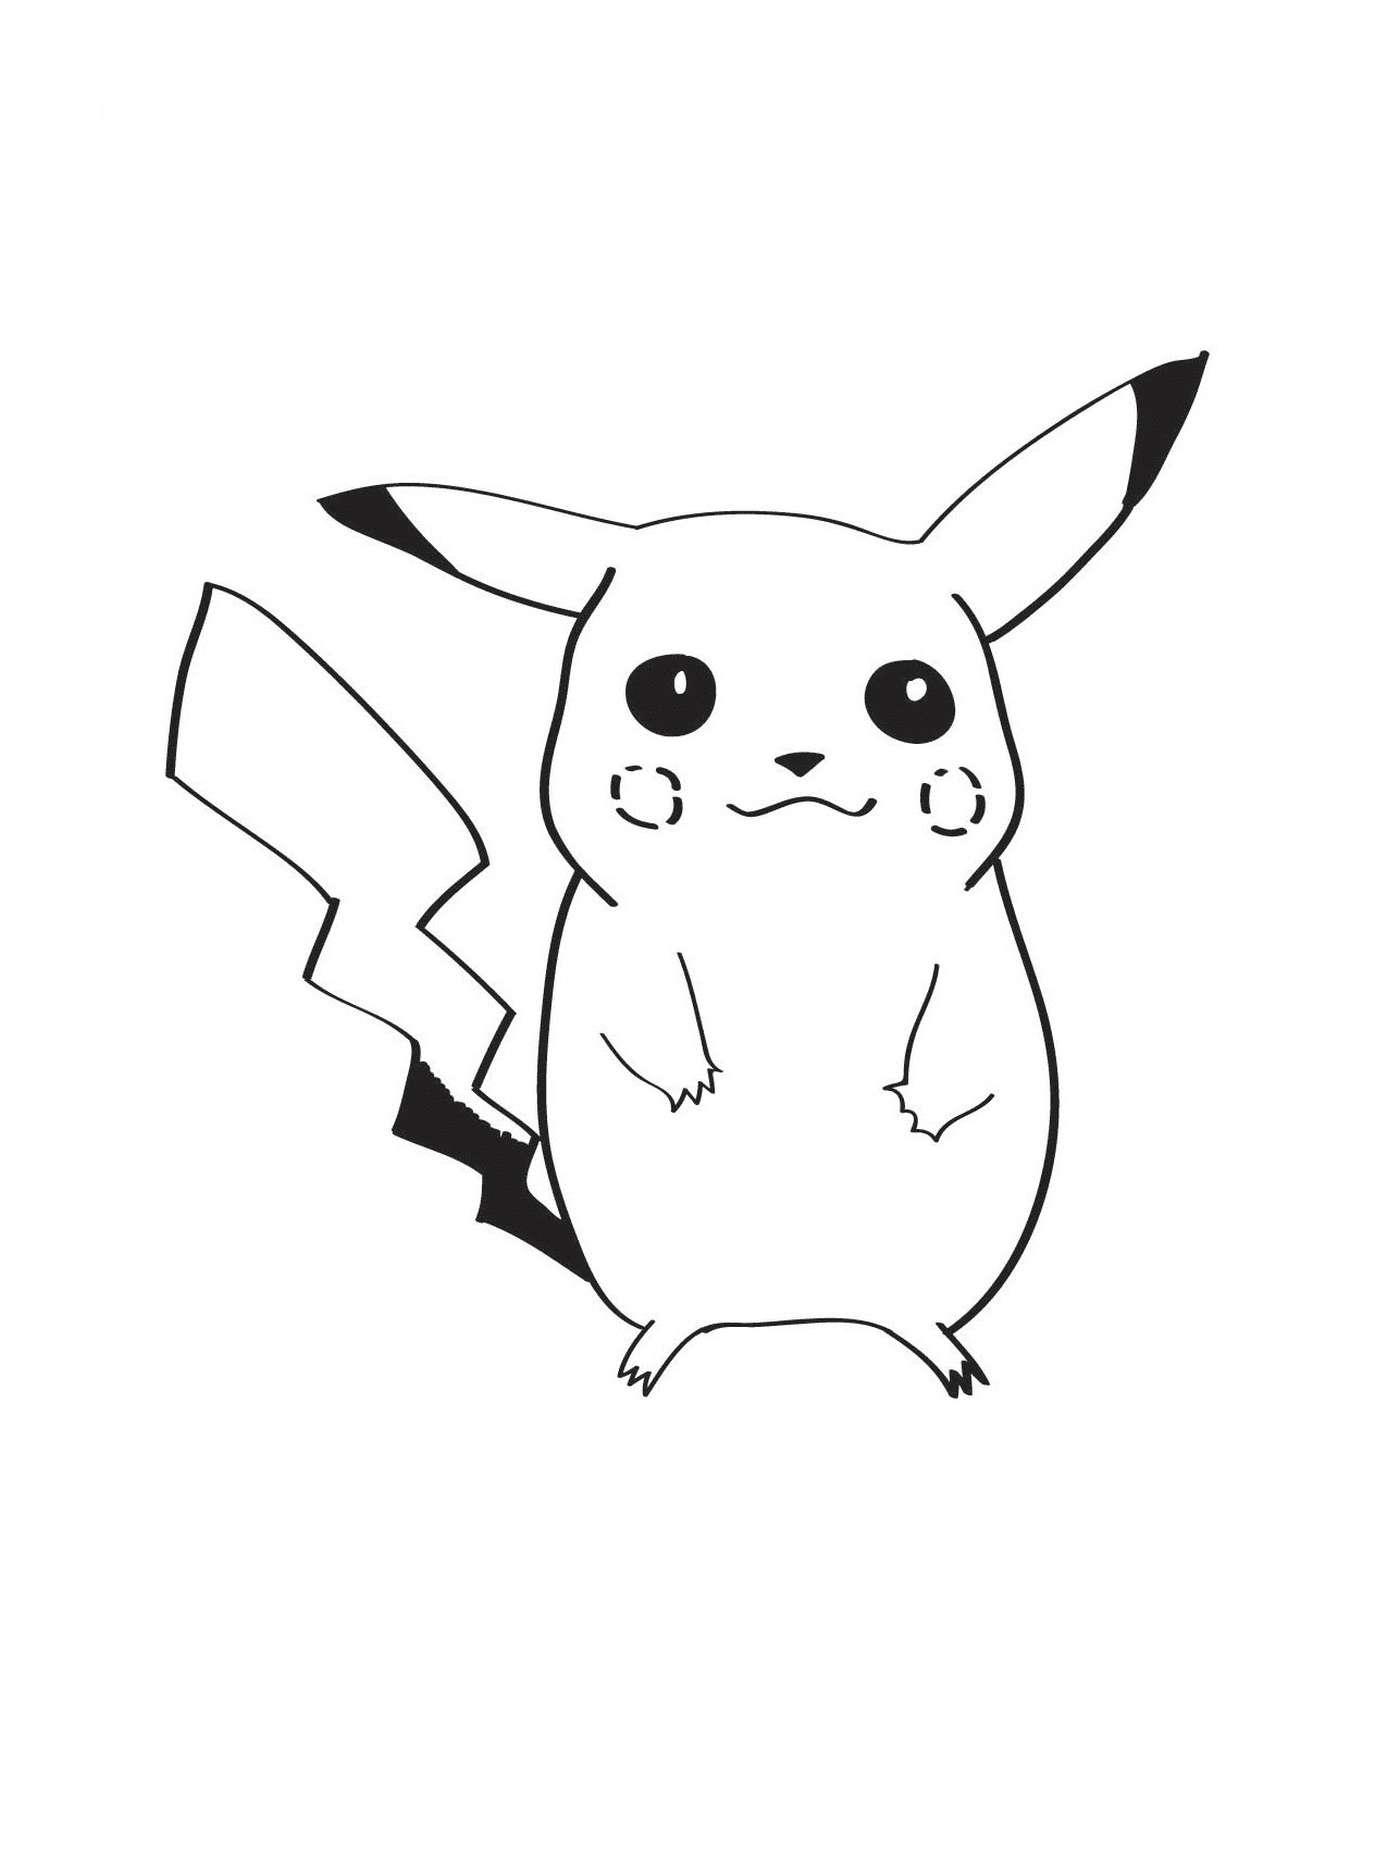   Pikachu, adorable petite créature 